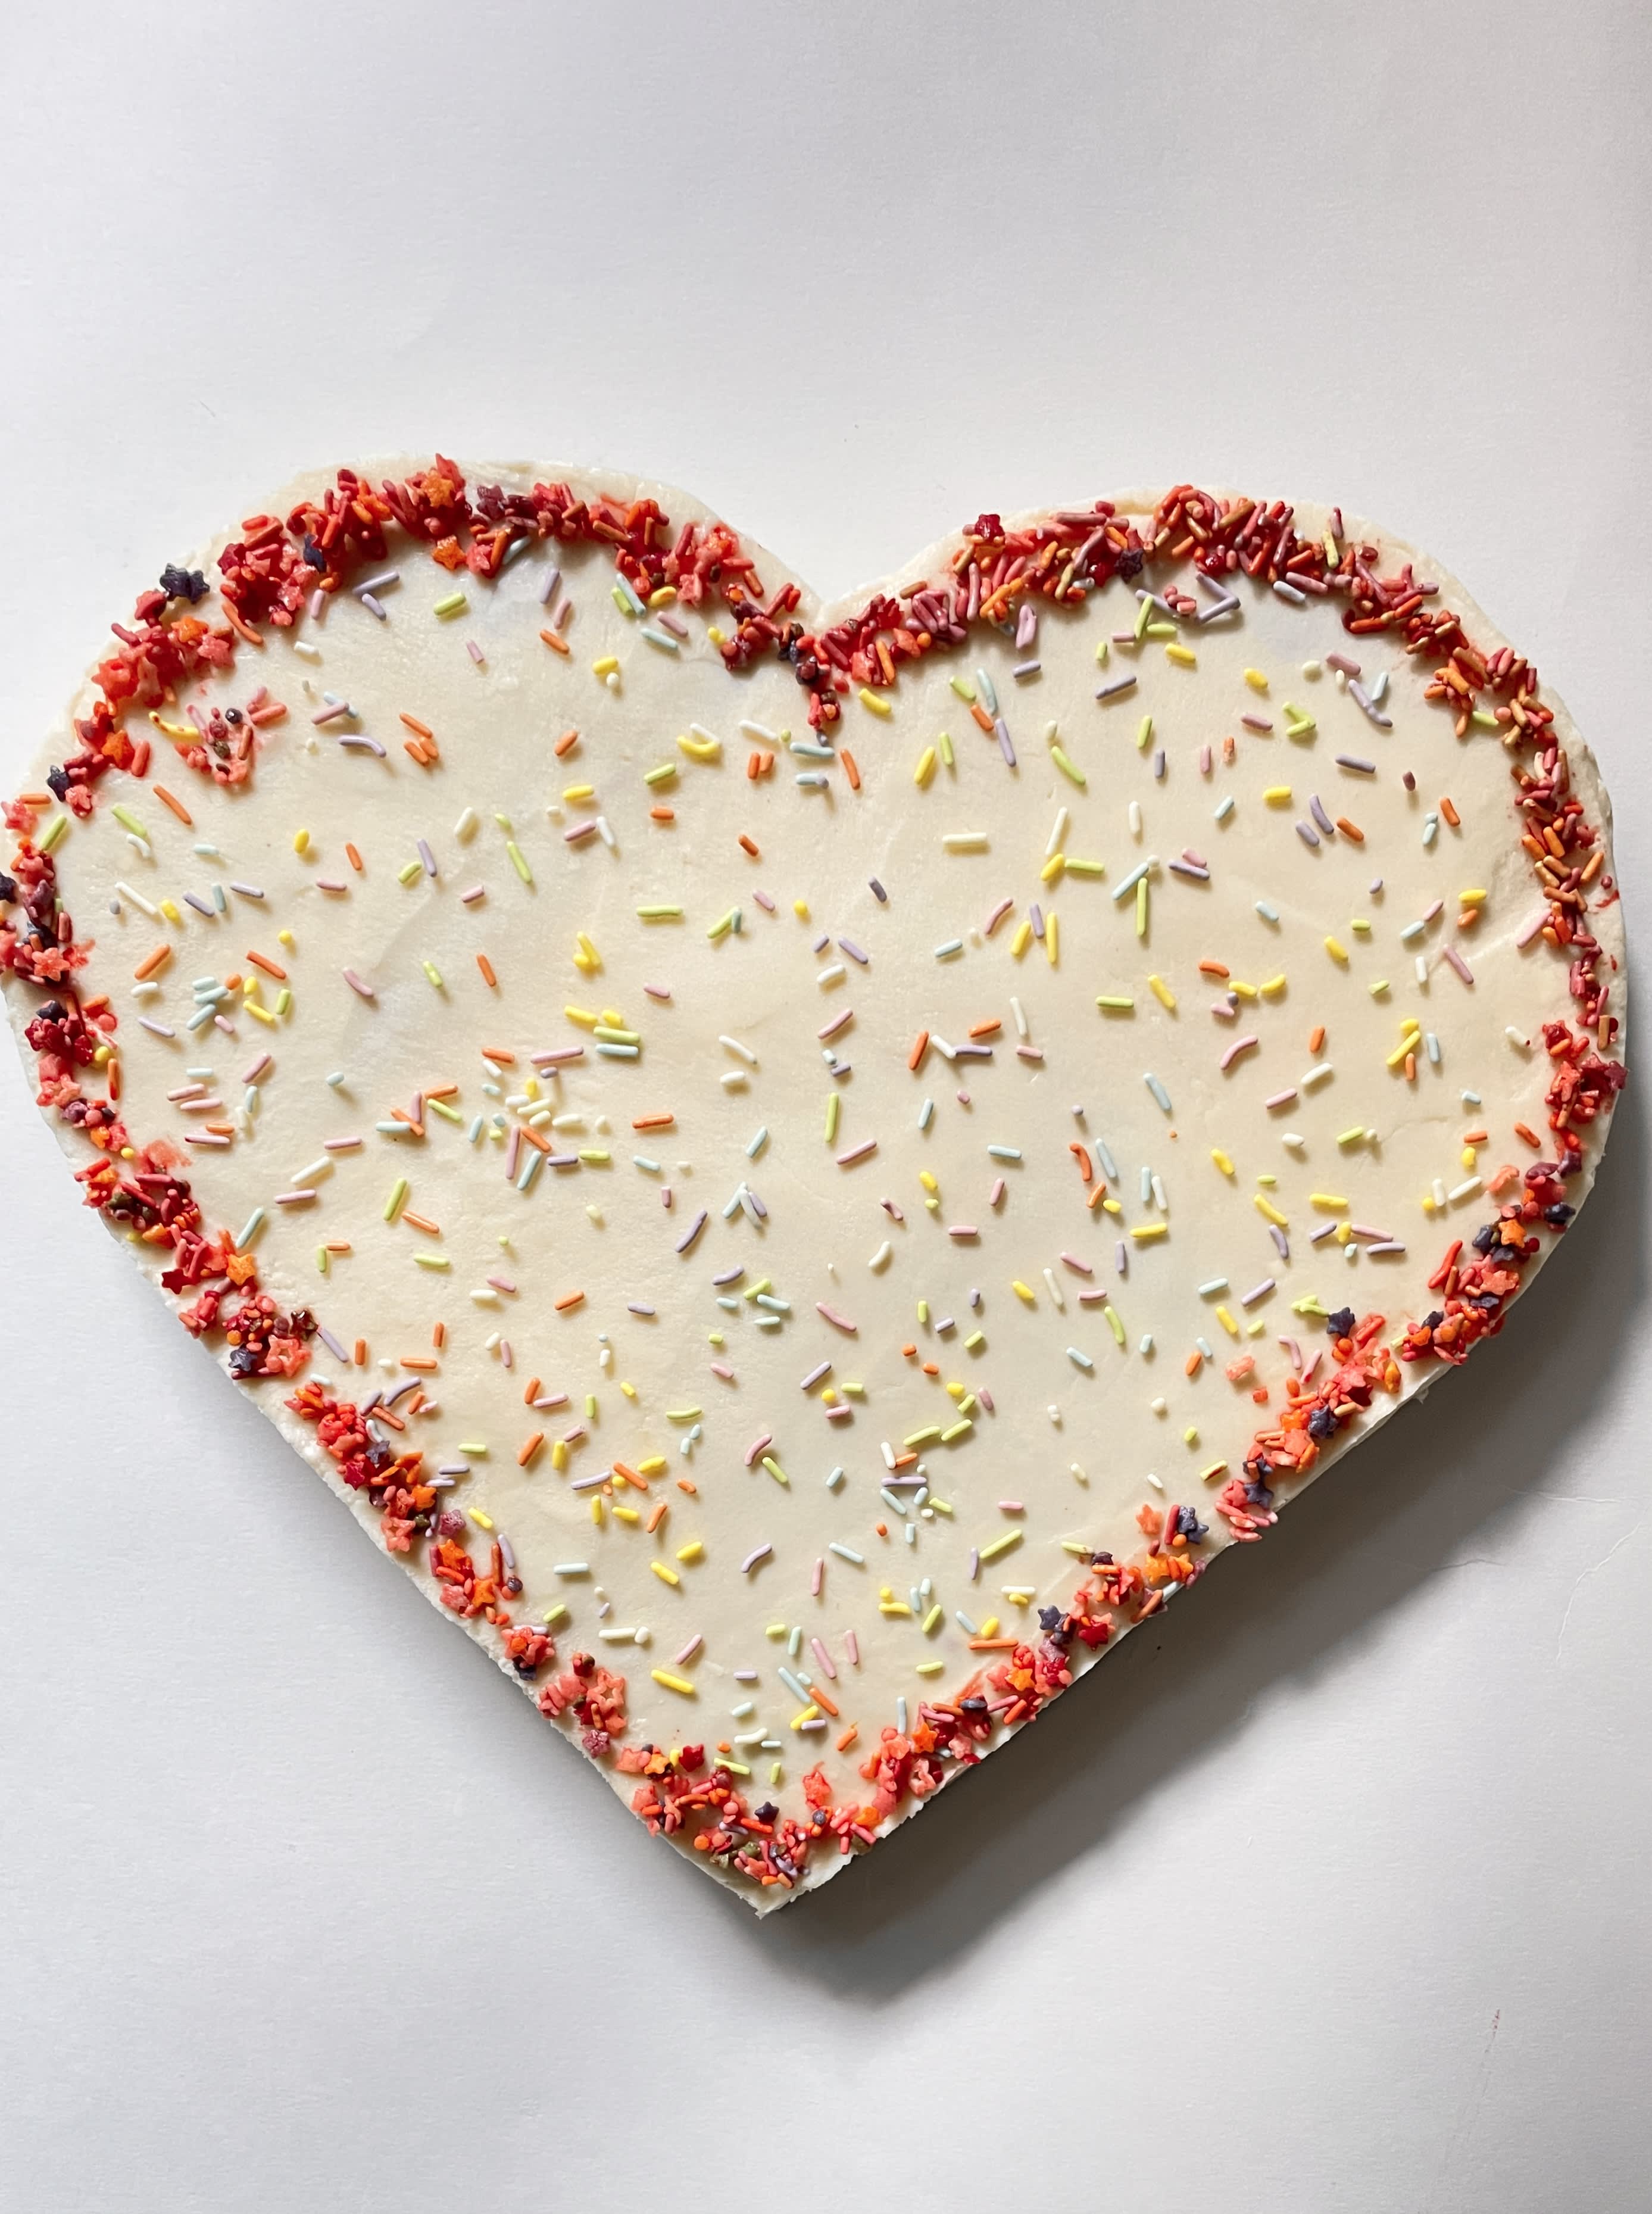 Buy/send Melting Chocolate Heart Cake order online in Anakapalli |  CakeWay.in